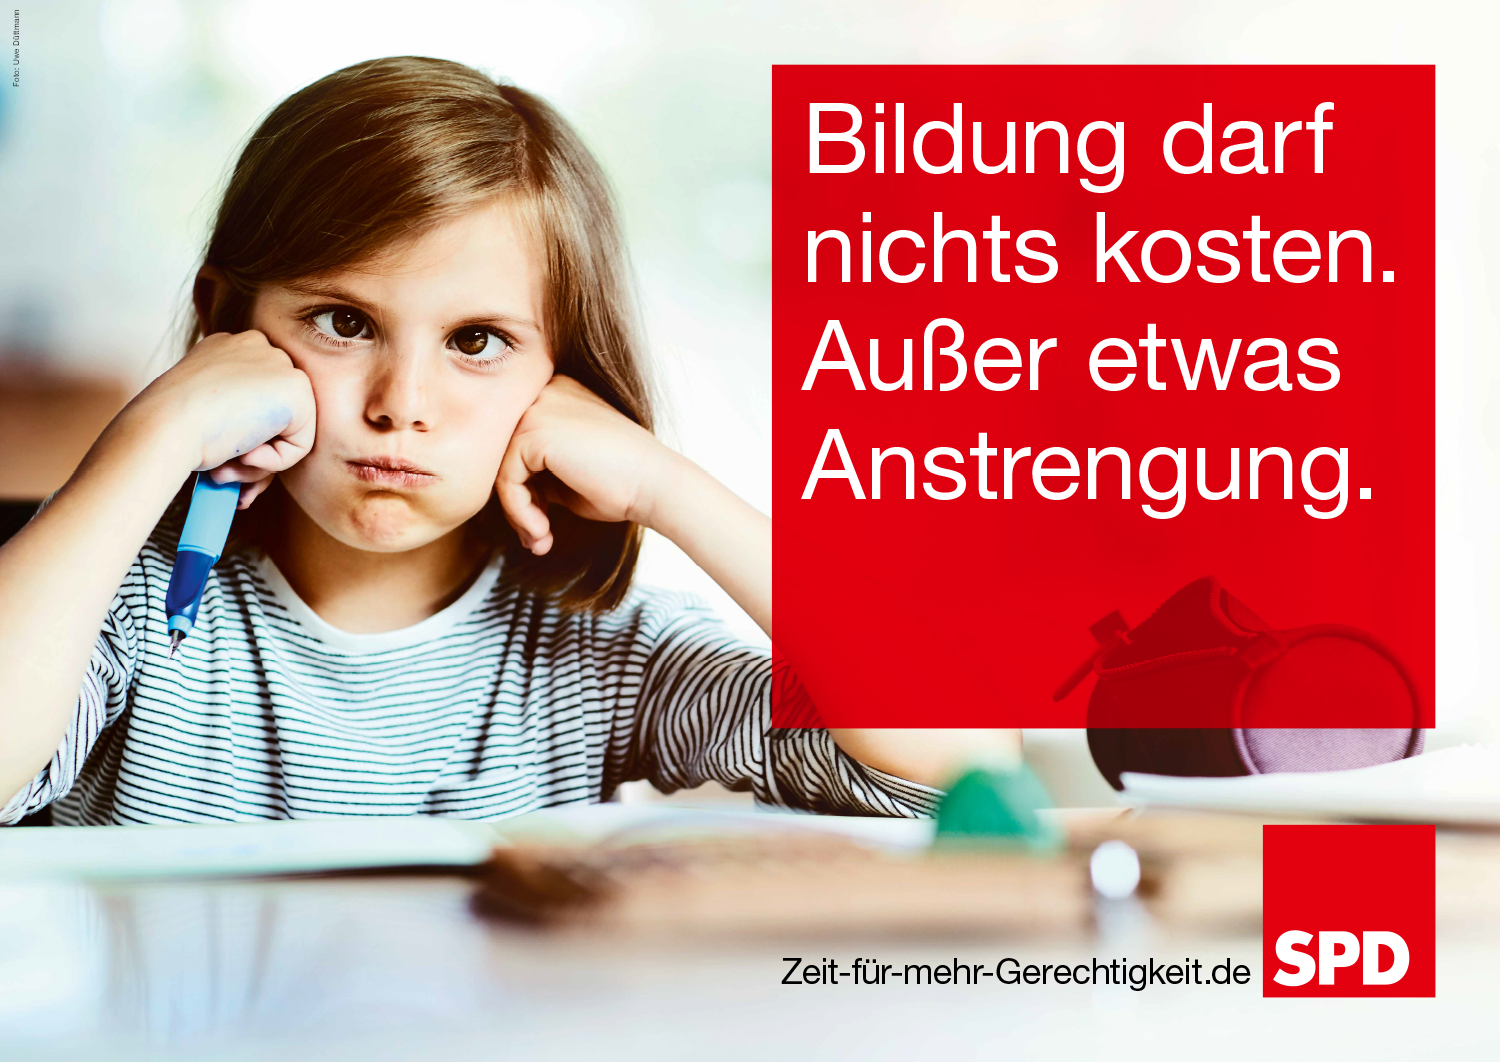 Bundestagswahl 2017 Plakat SPD, Bildung